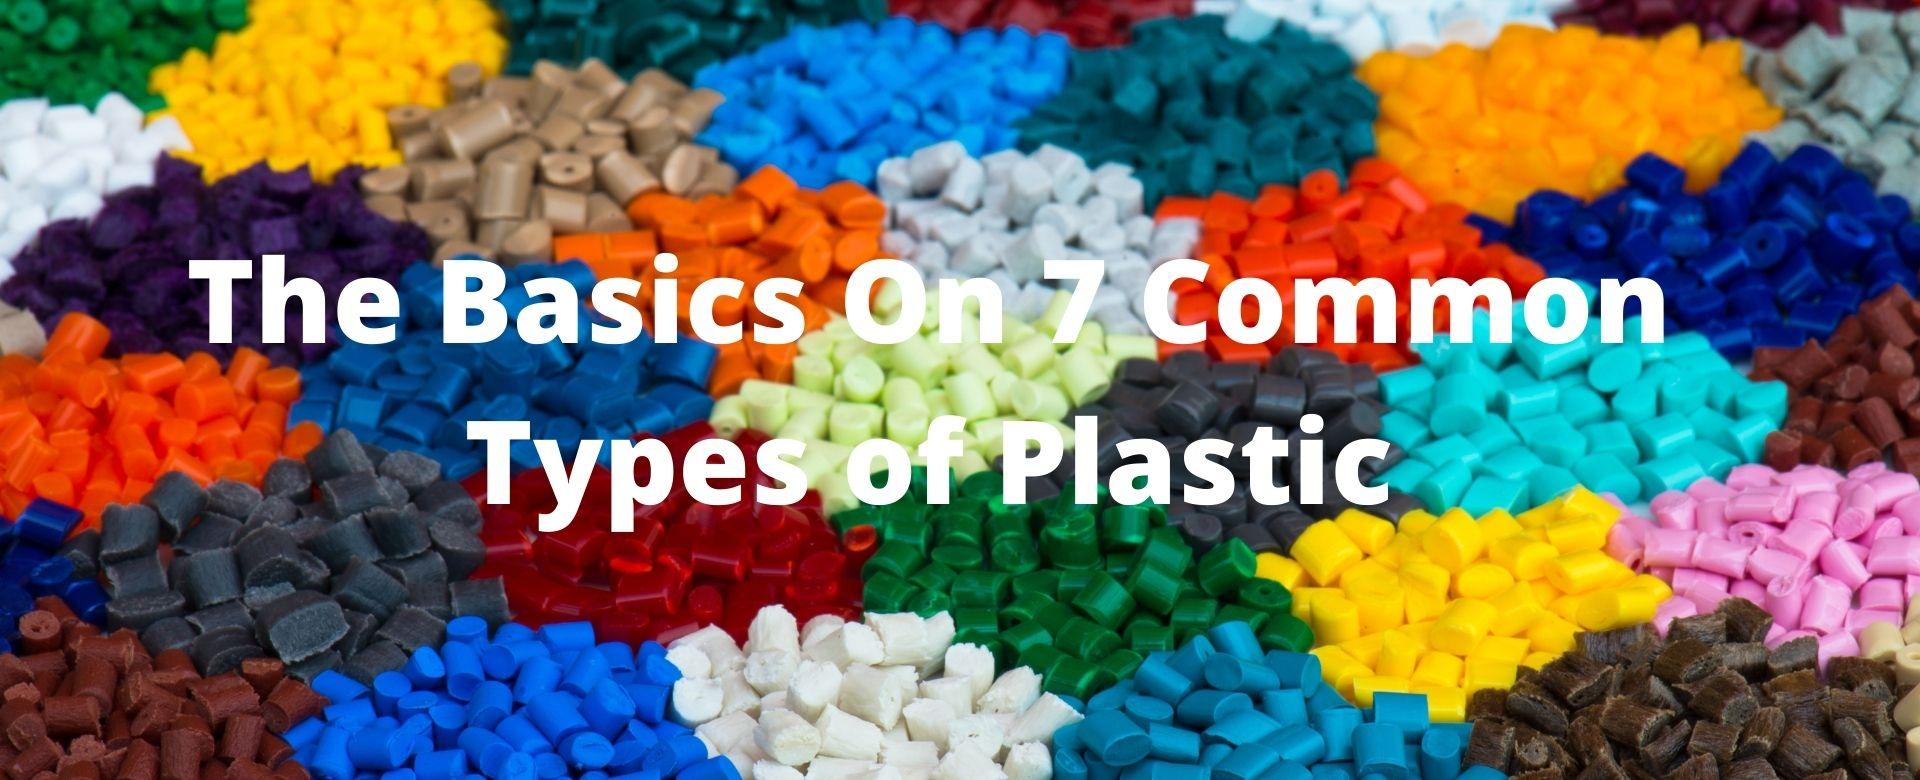 The Basics On 7 Common Types of Plastic